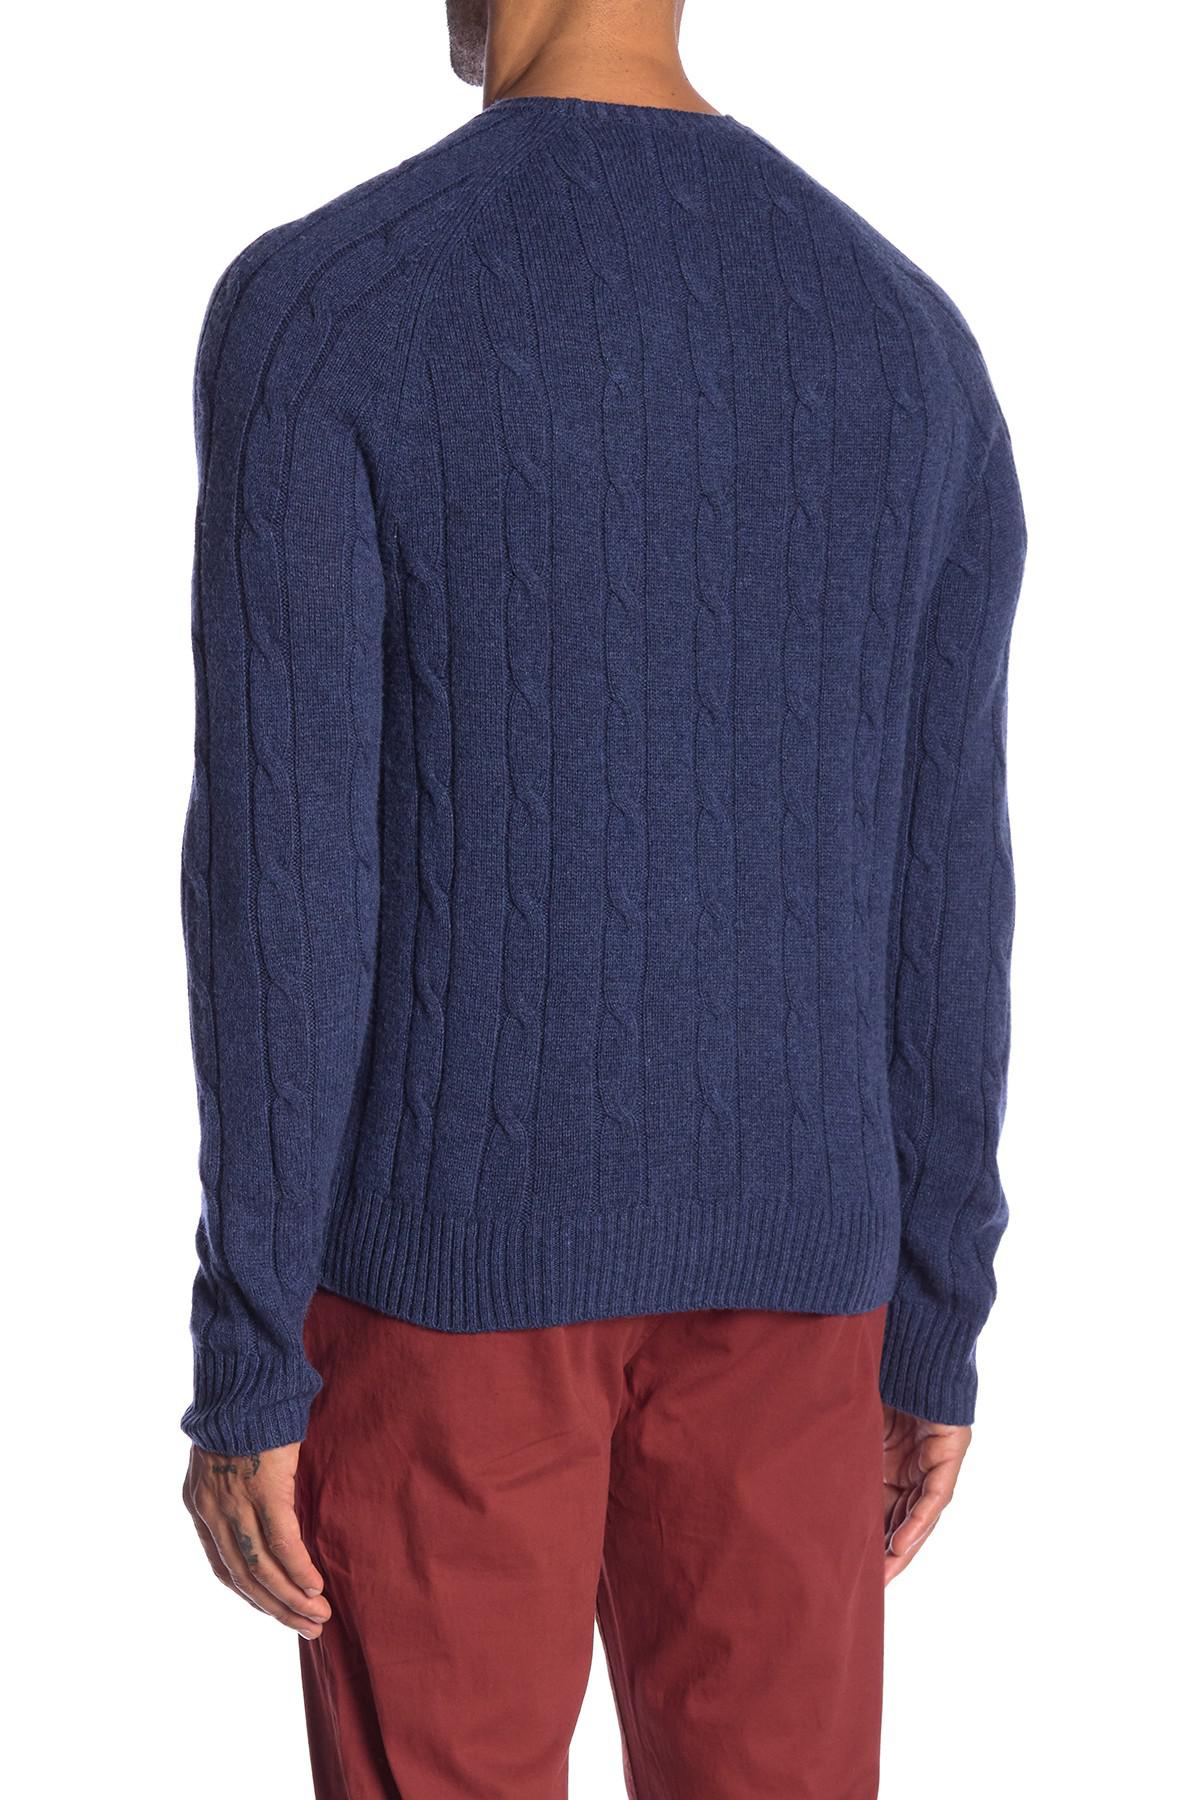 Brand Goodthreads Mens Soft Cotton Ottoman Stitch Crewneck Sweater